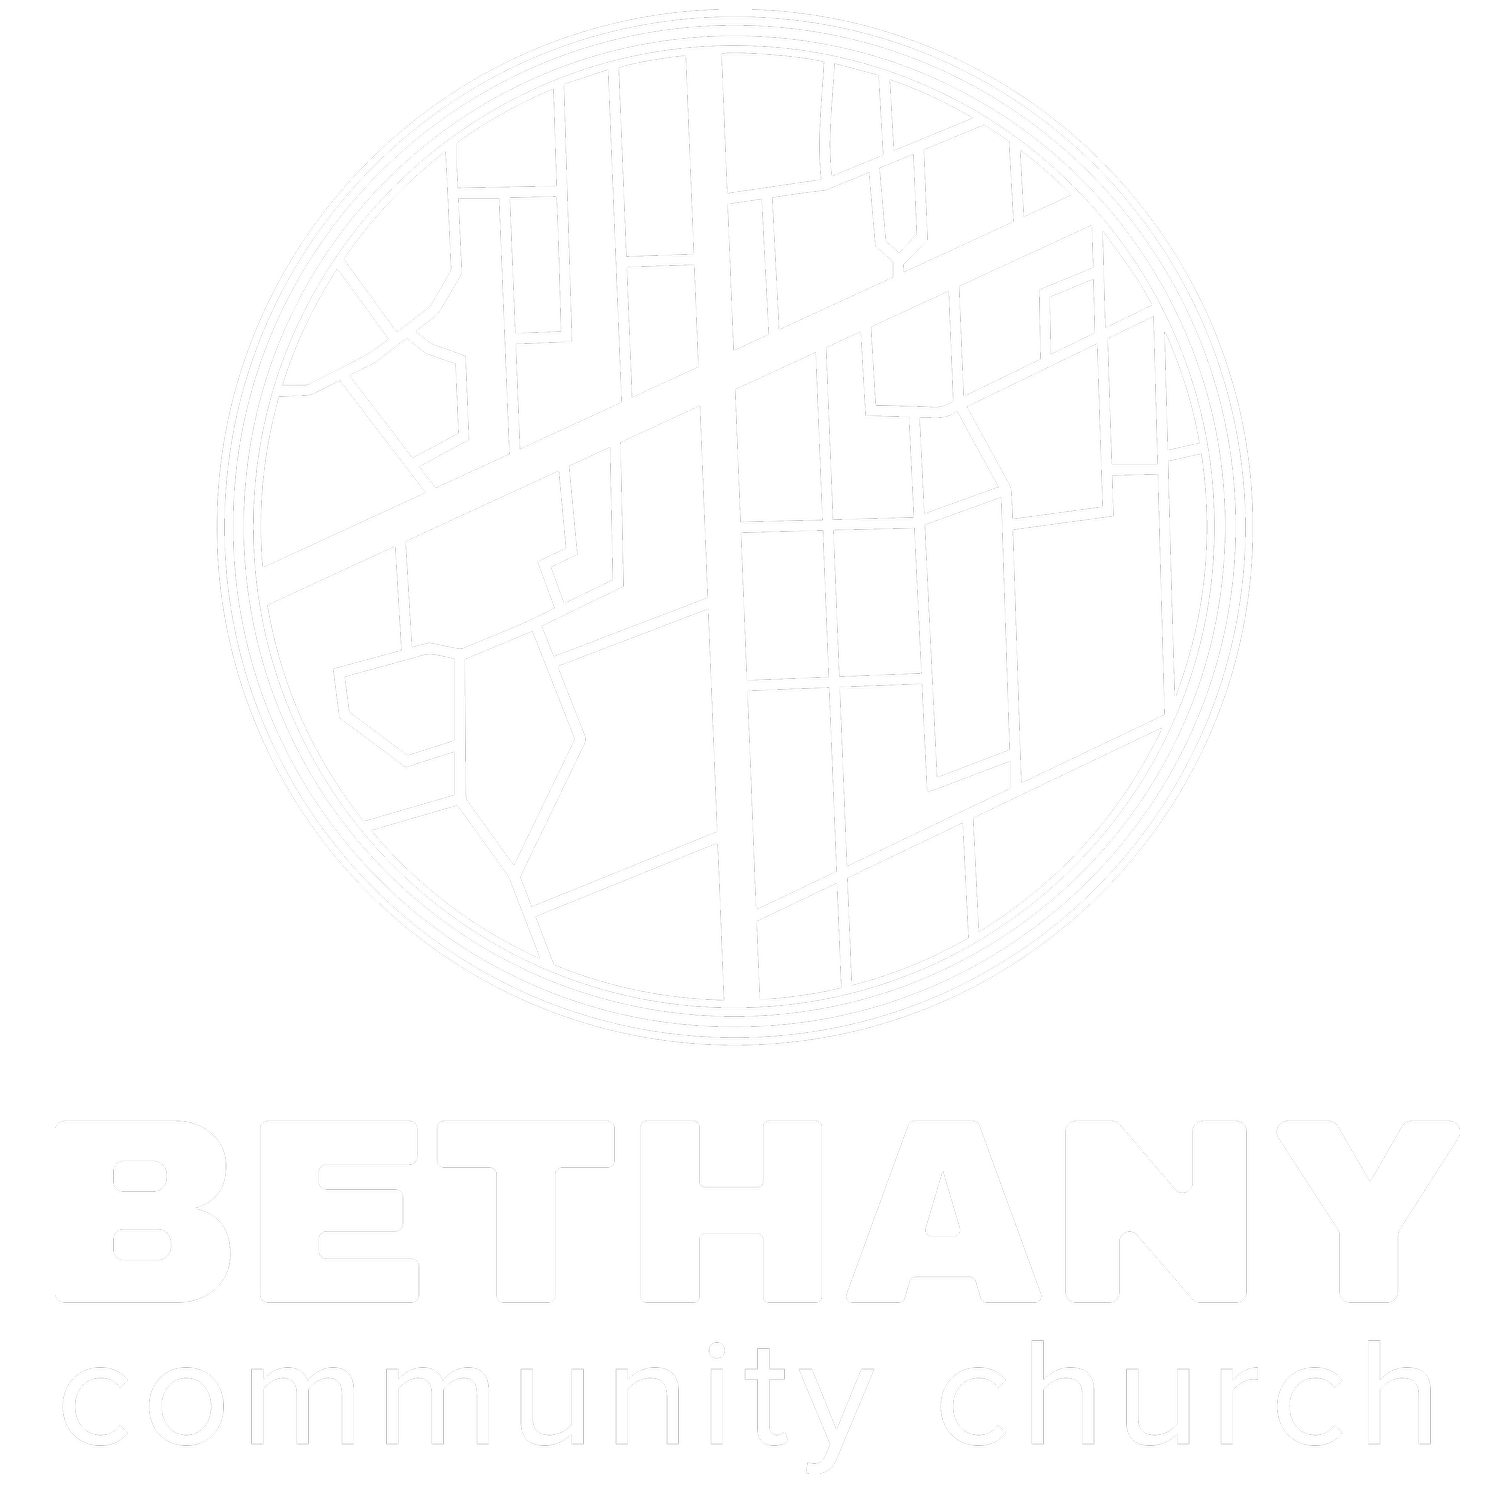 BETHANY COMMUNITY CHURCH